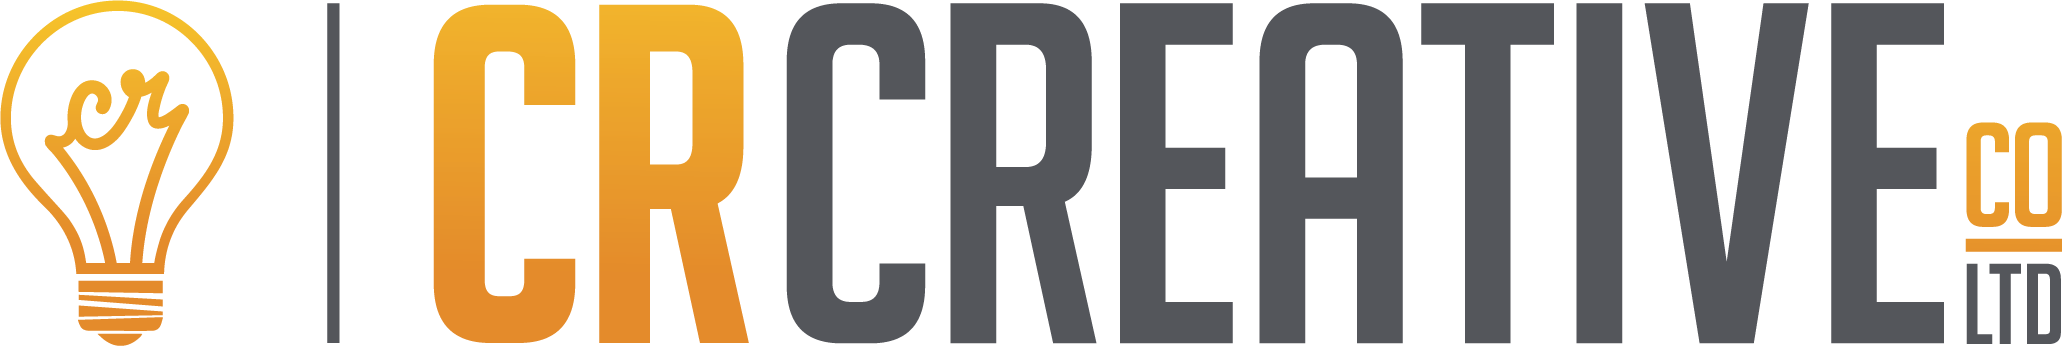 CR Creative Co Ltd.